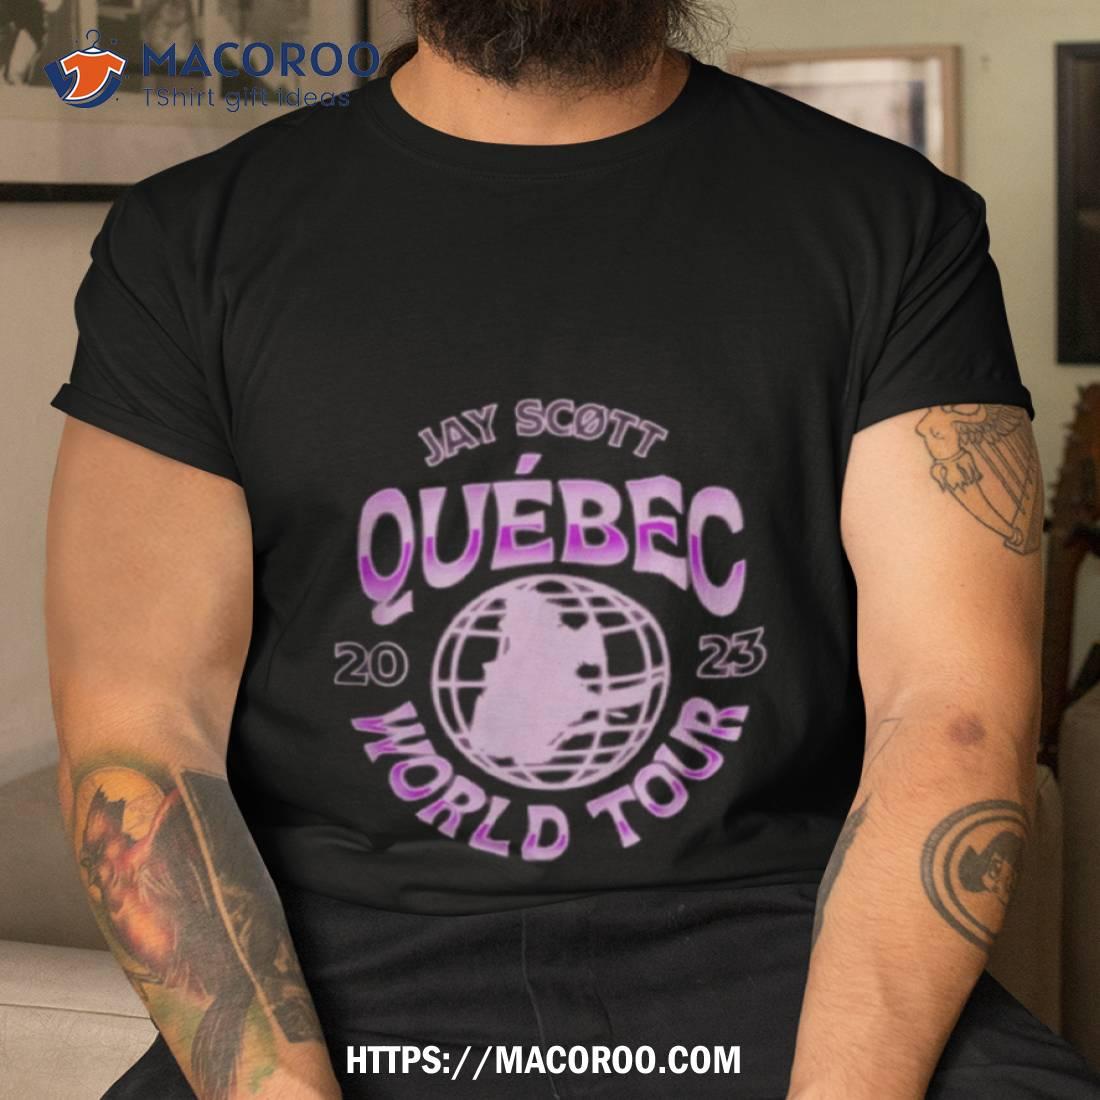 Jay Scott Quebec World Tour 2023 Shirt Tshirt